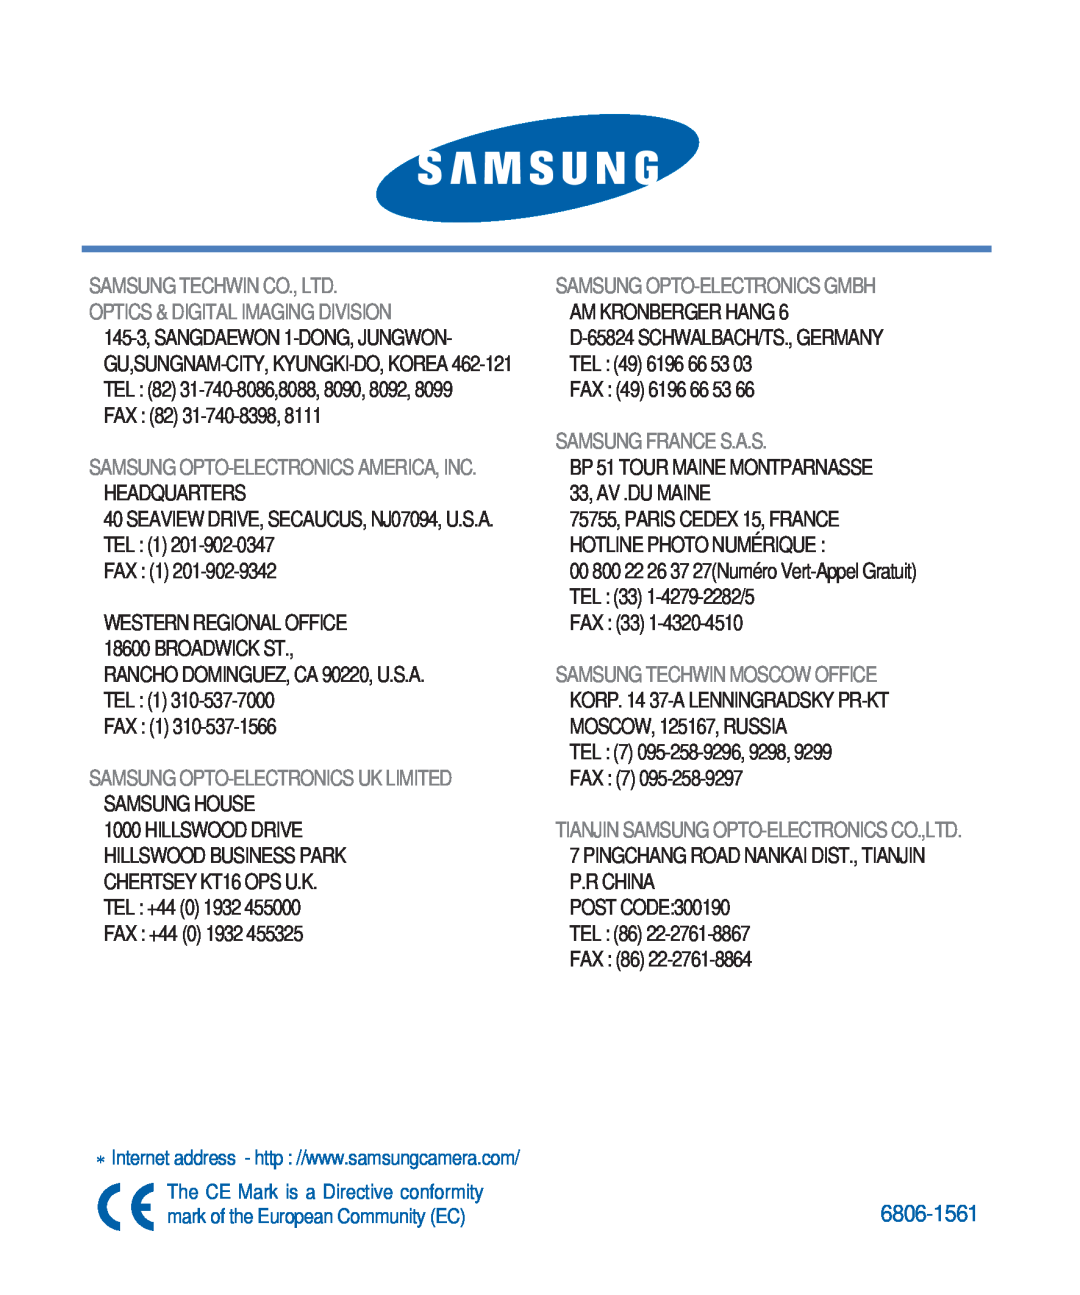 Samsung 420 manual 6806-1561, Samsung Opto-Electronics America, Inc. Headquarters, Samsung France S.A.S 